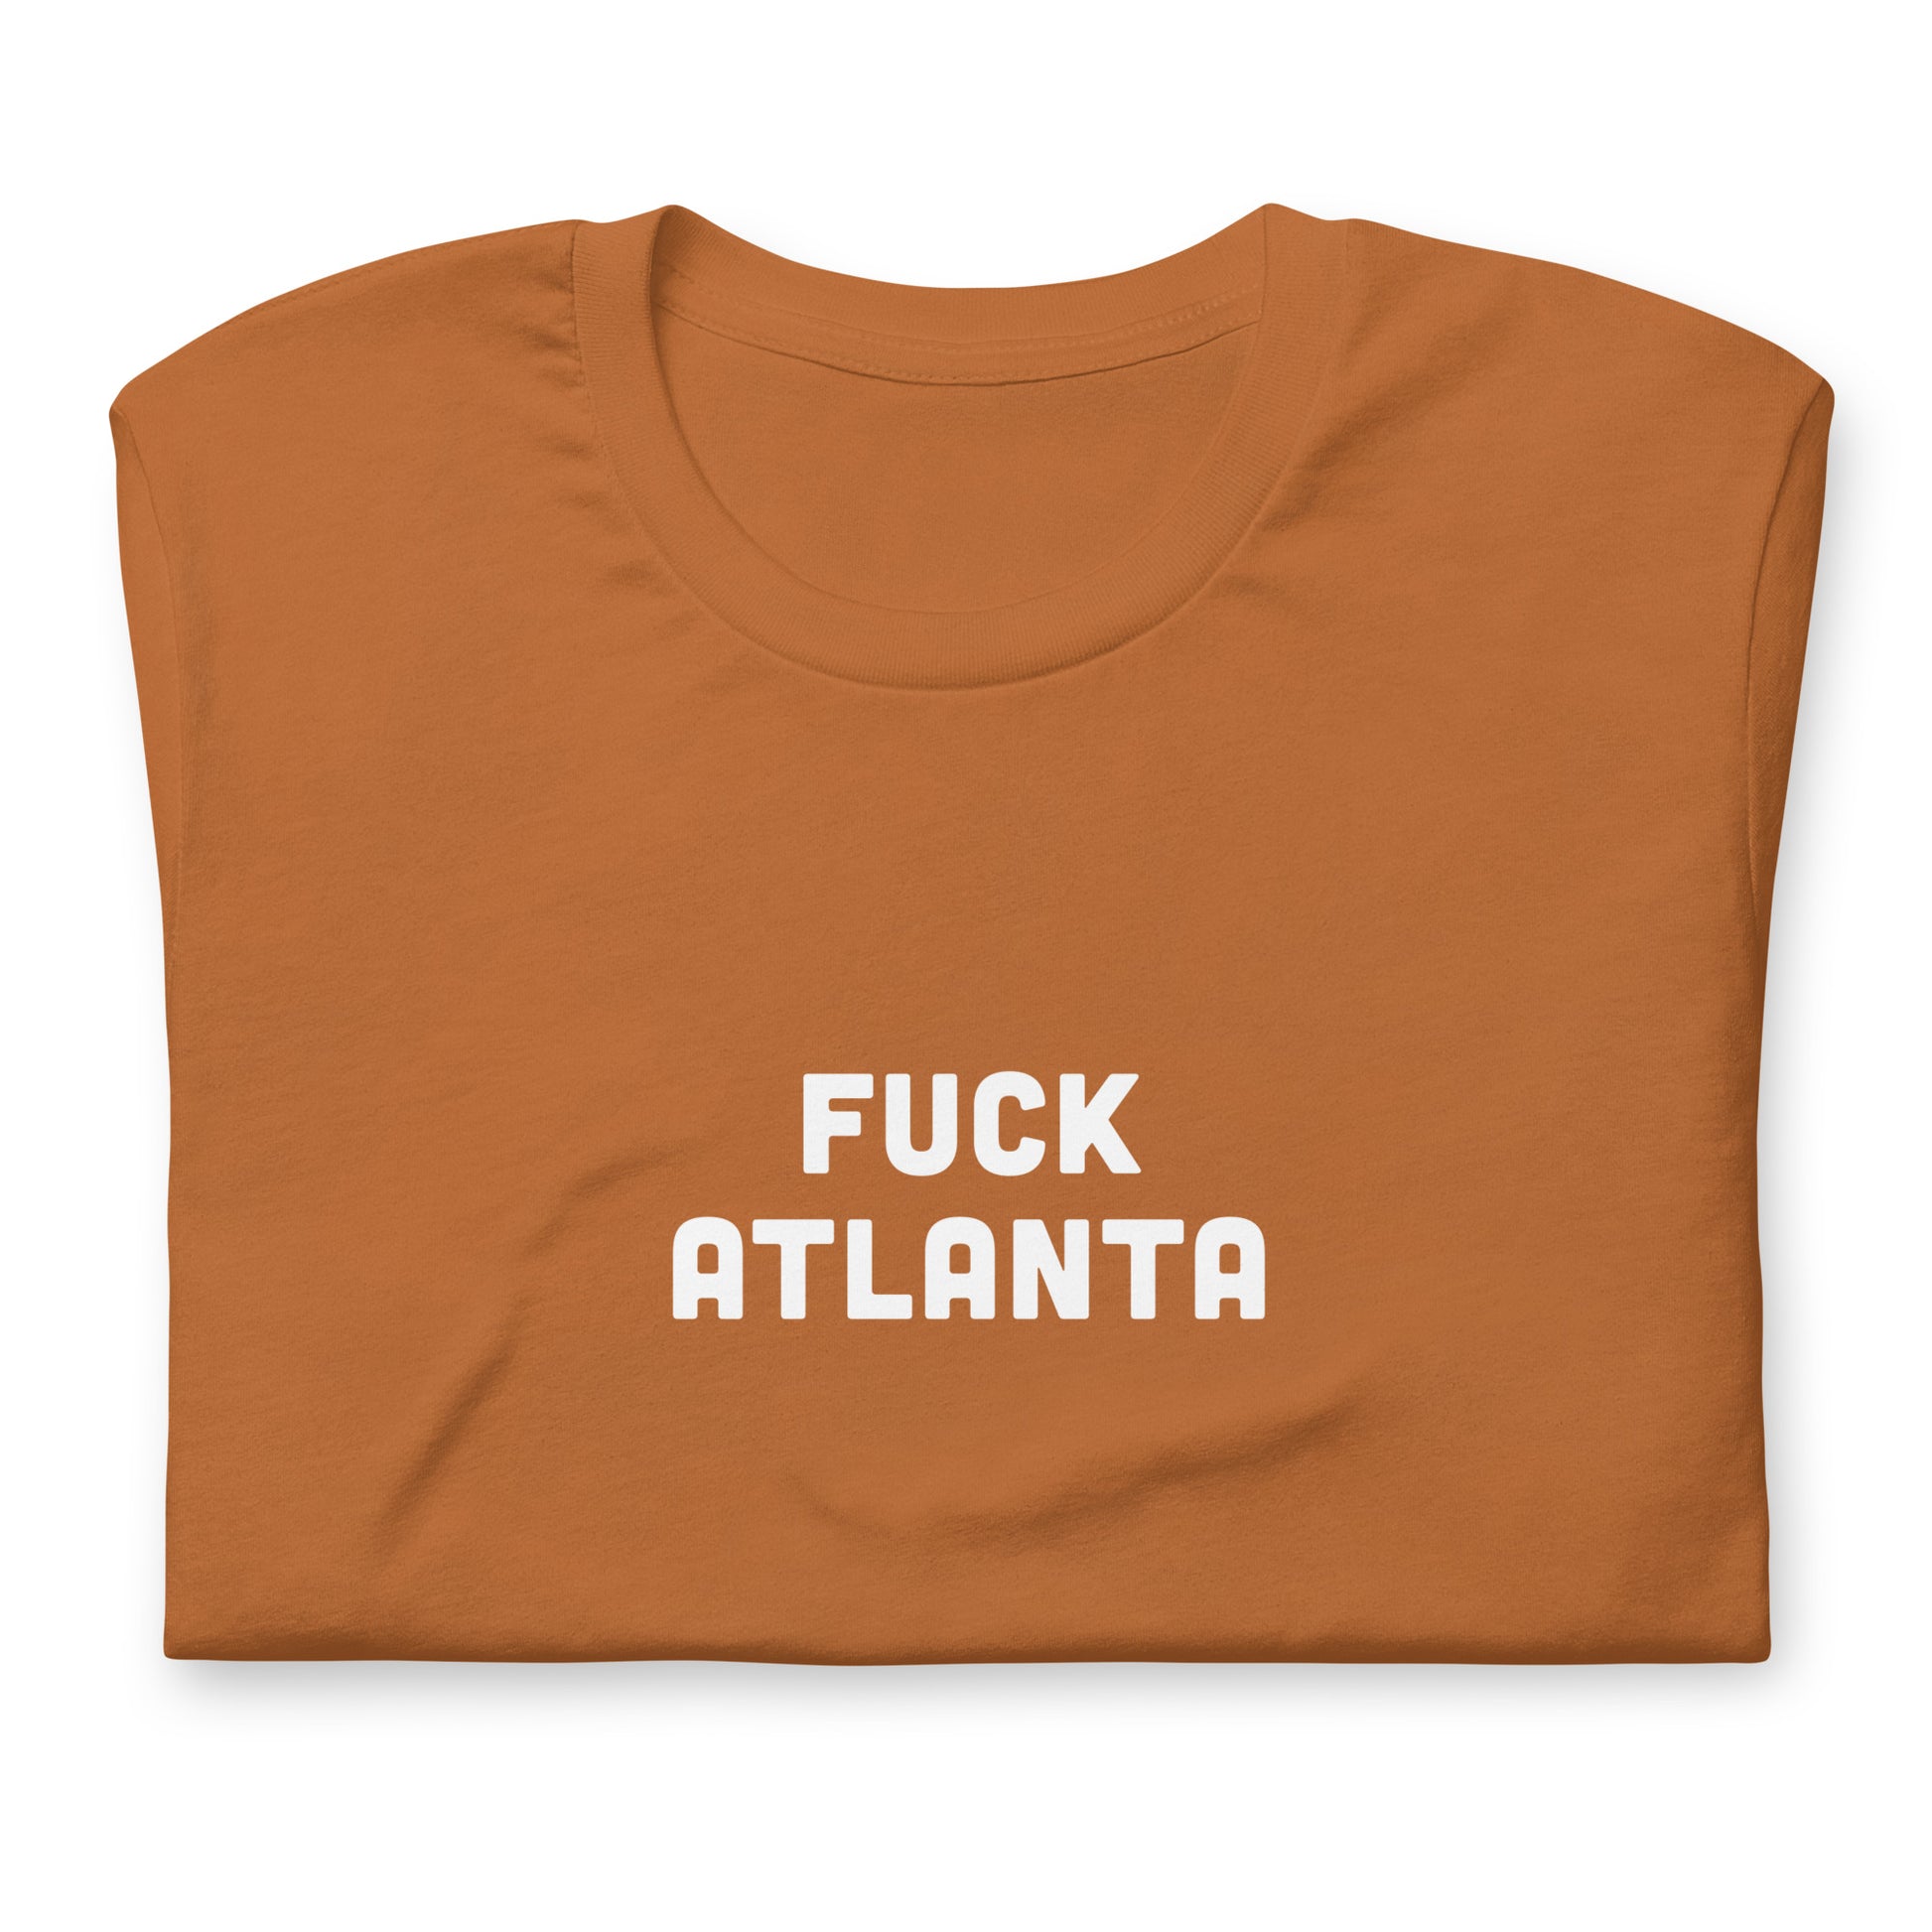 Fuck Atlanta T-Shirt Size M Color Forest